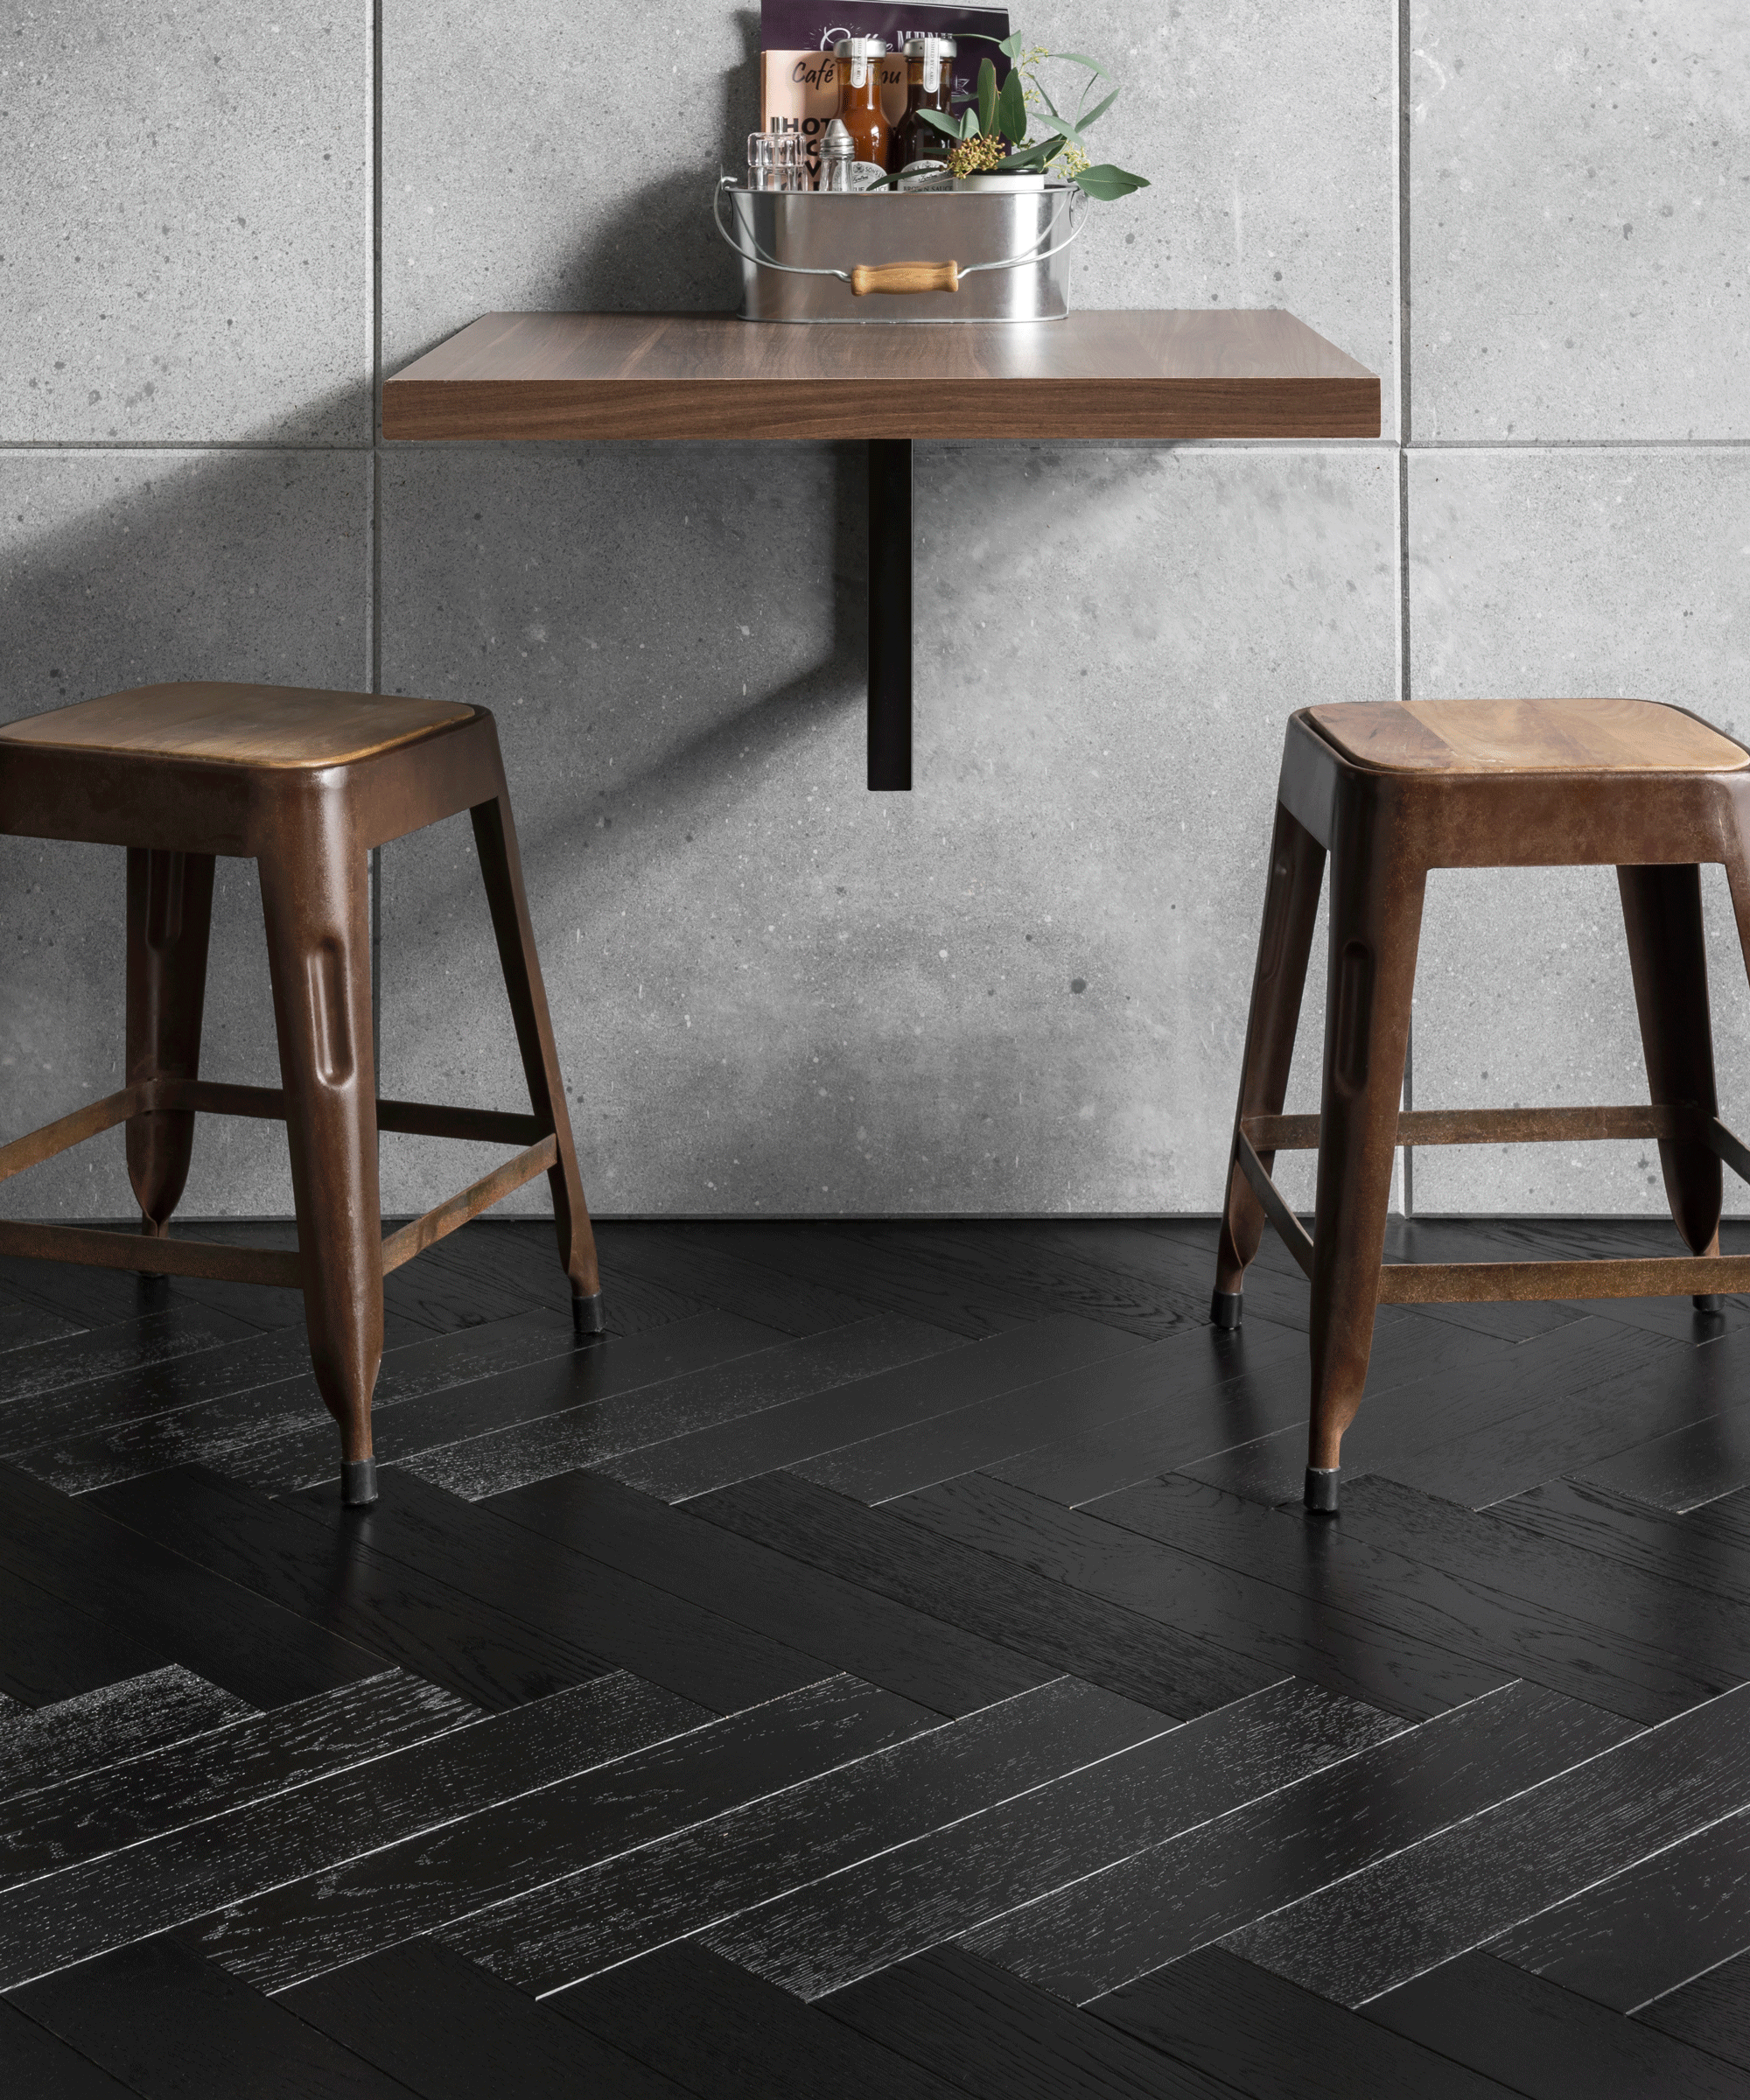 Kitchen stools against an island with black herringbone flooring